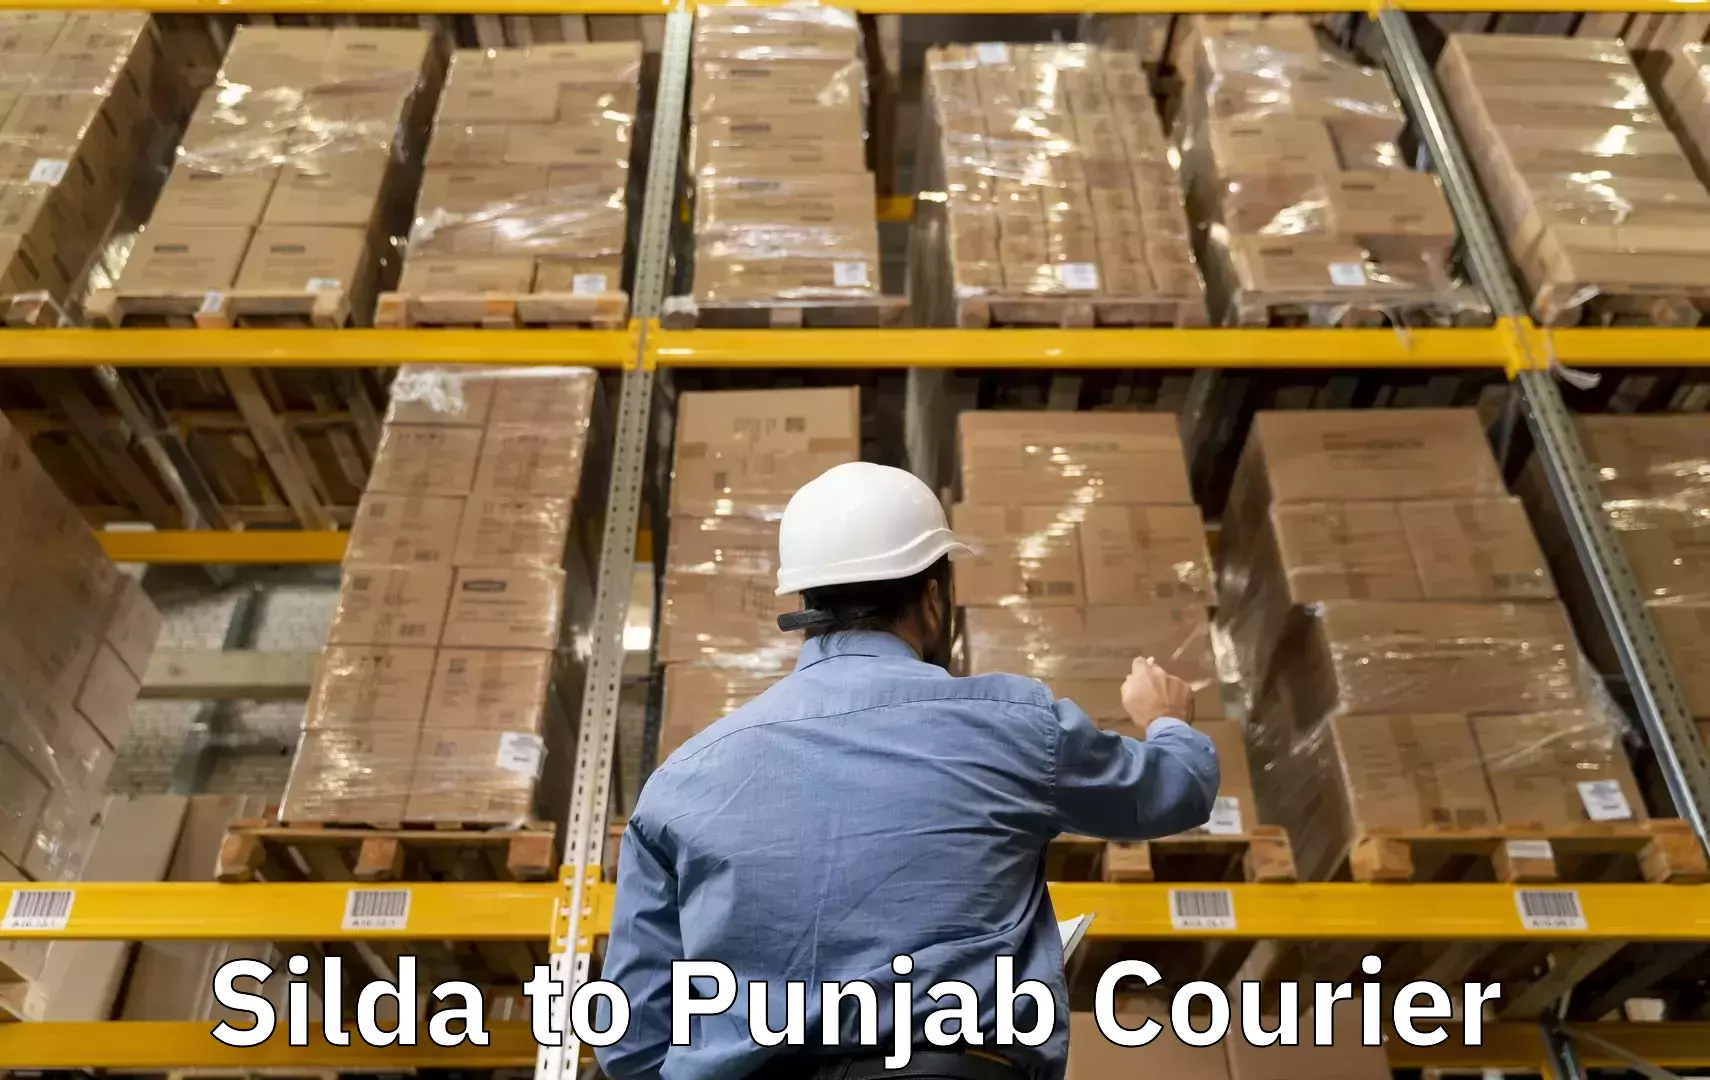 Luggage transport consulting Silda to Punjab